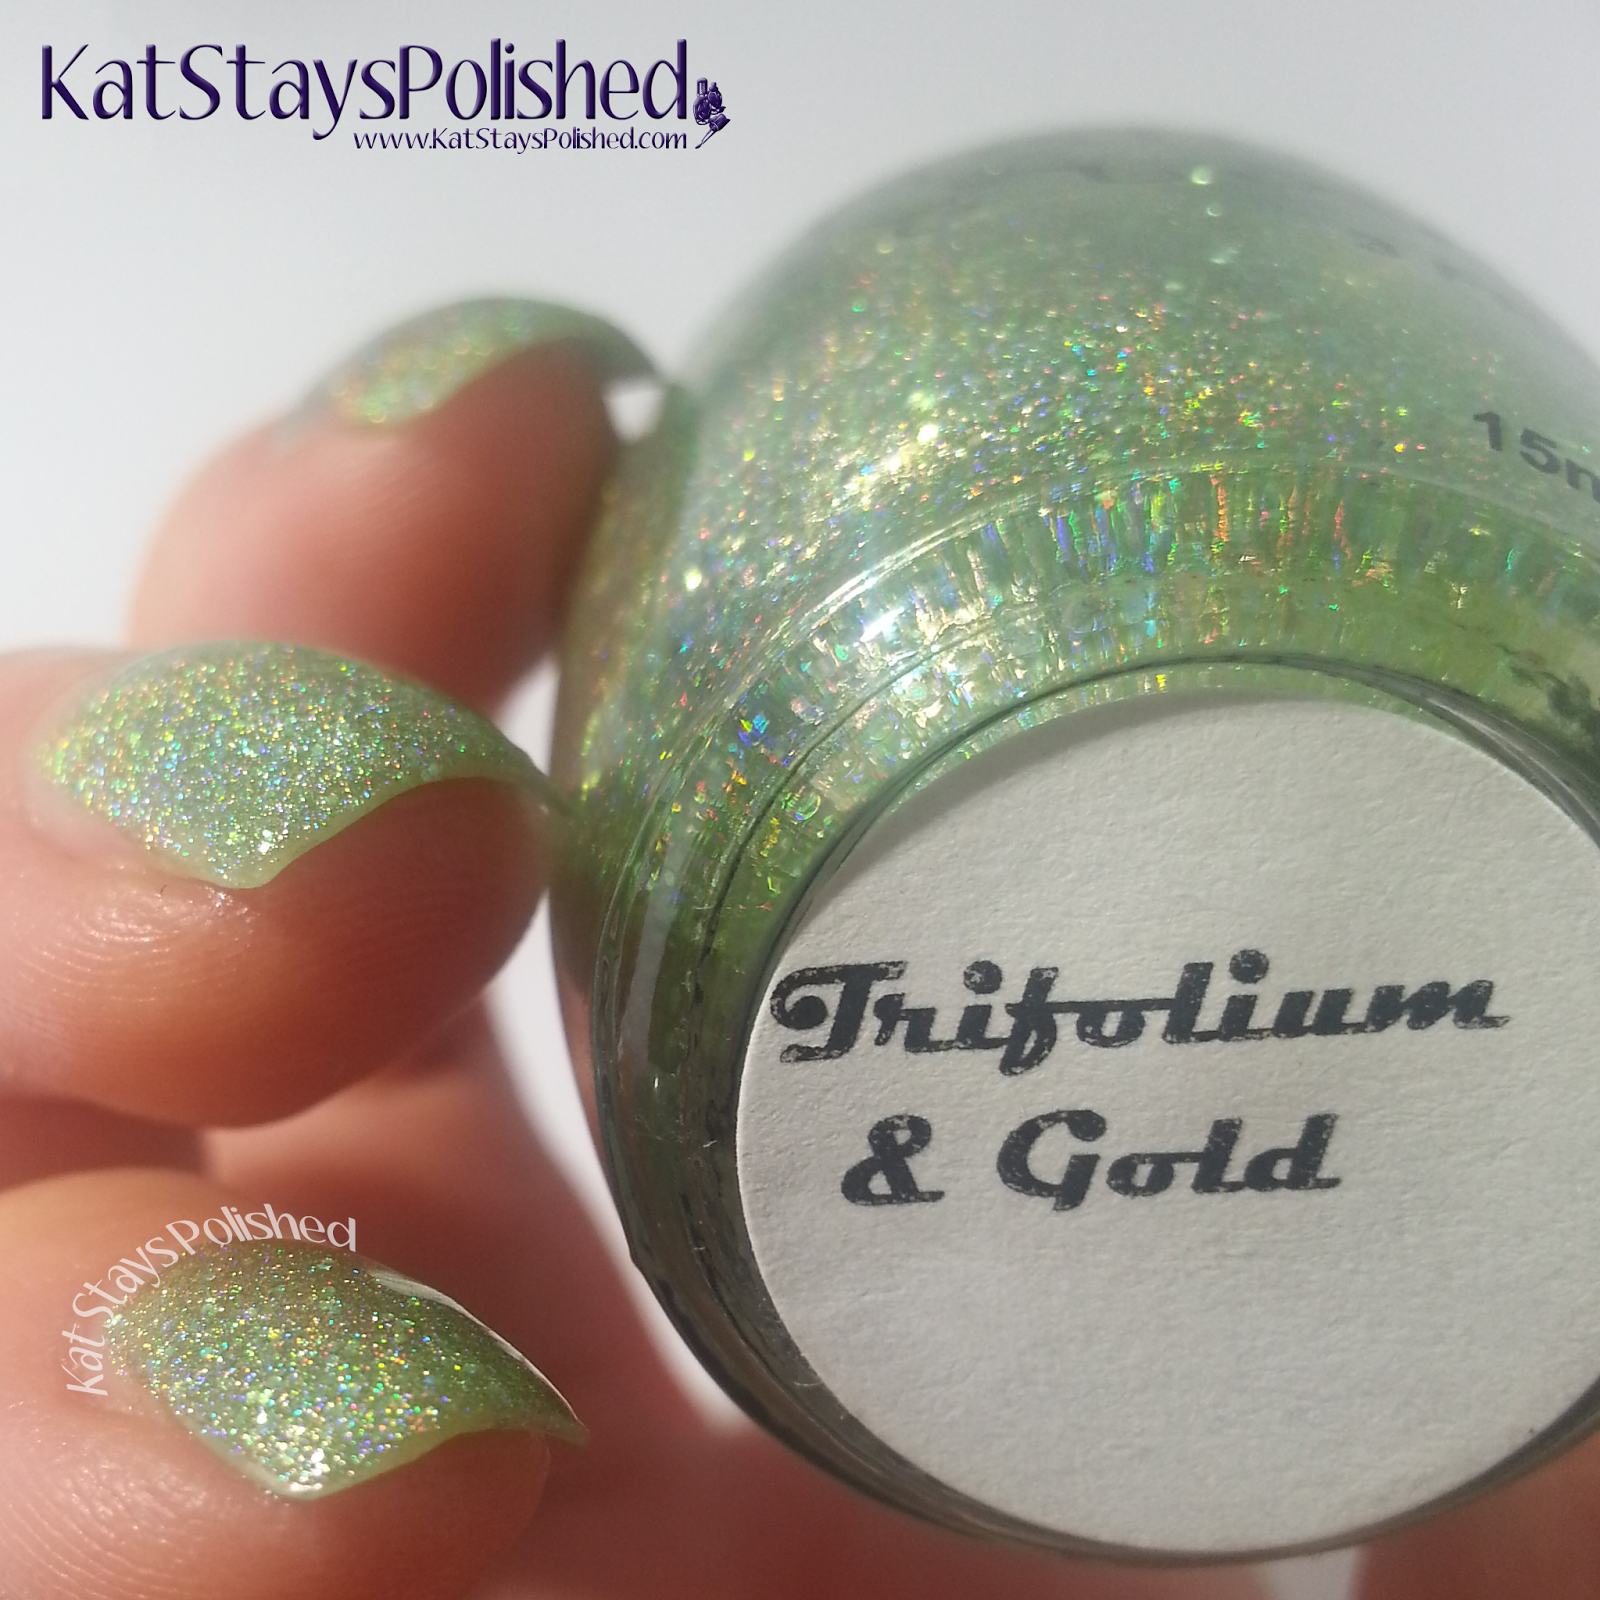 NailNation3000 - Trifolium & Gold | Kat Stays Polished